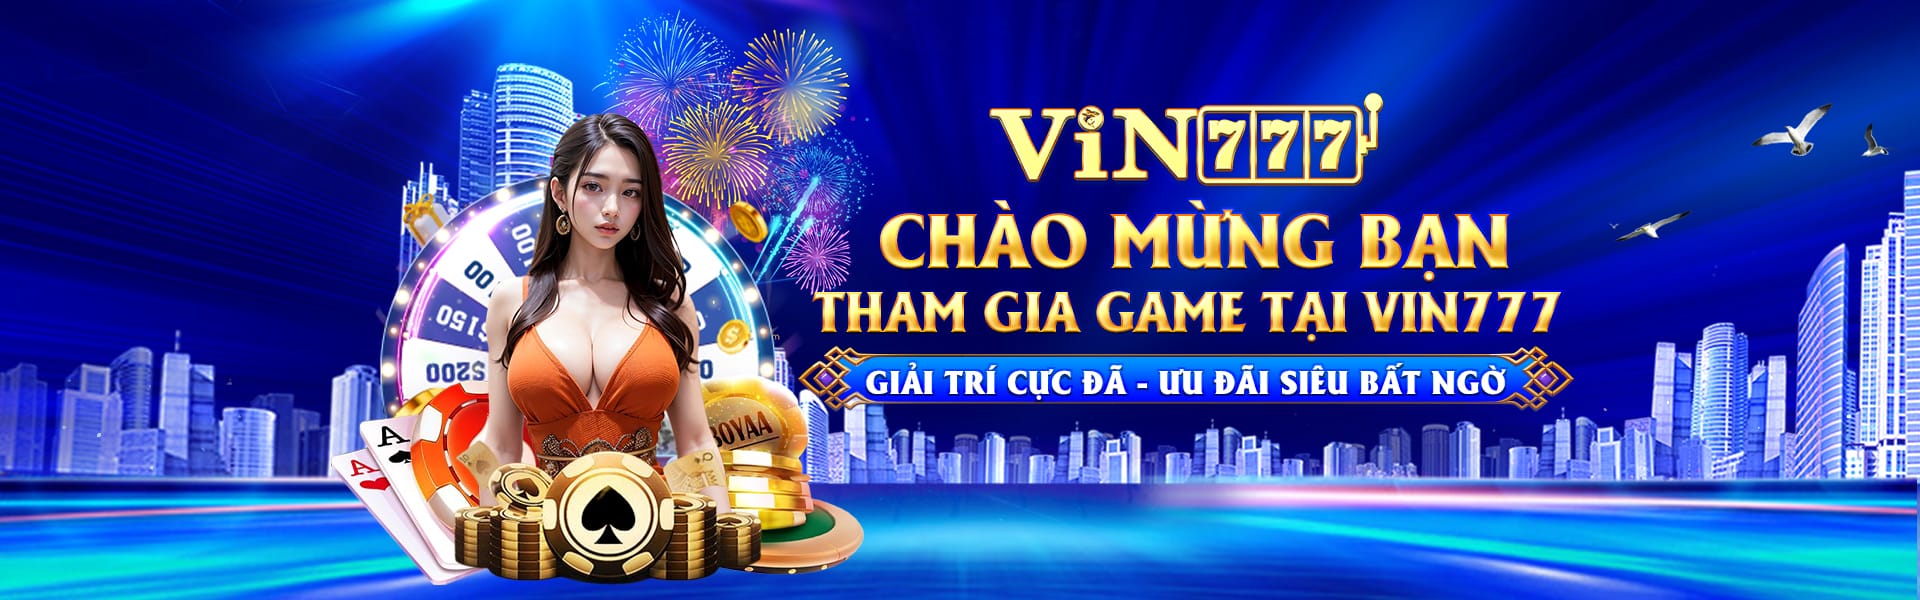 vin777-chao-mung